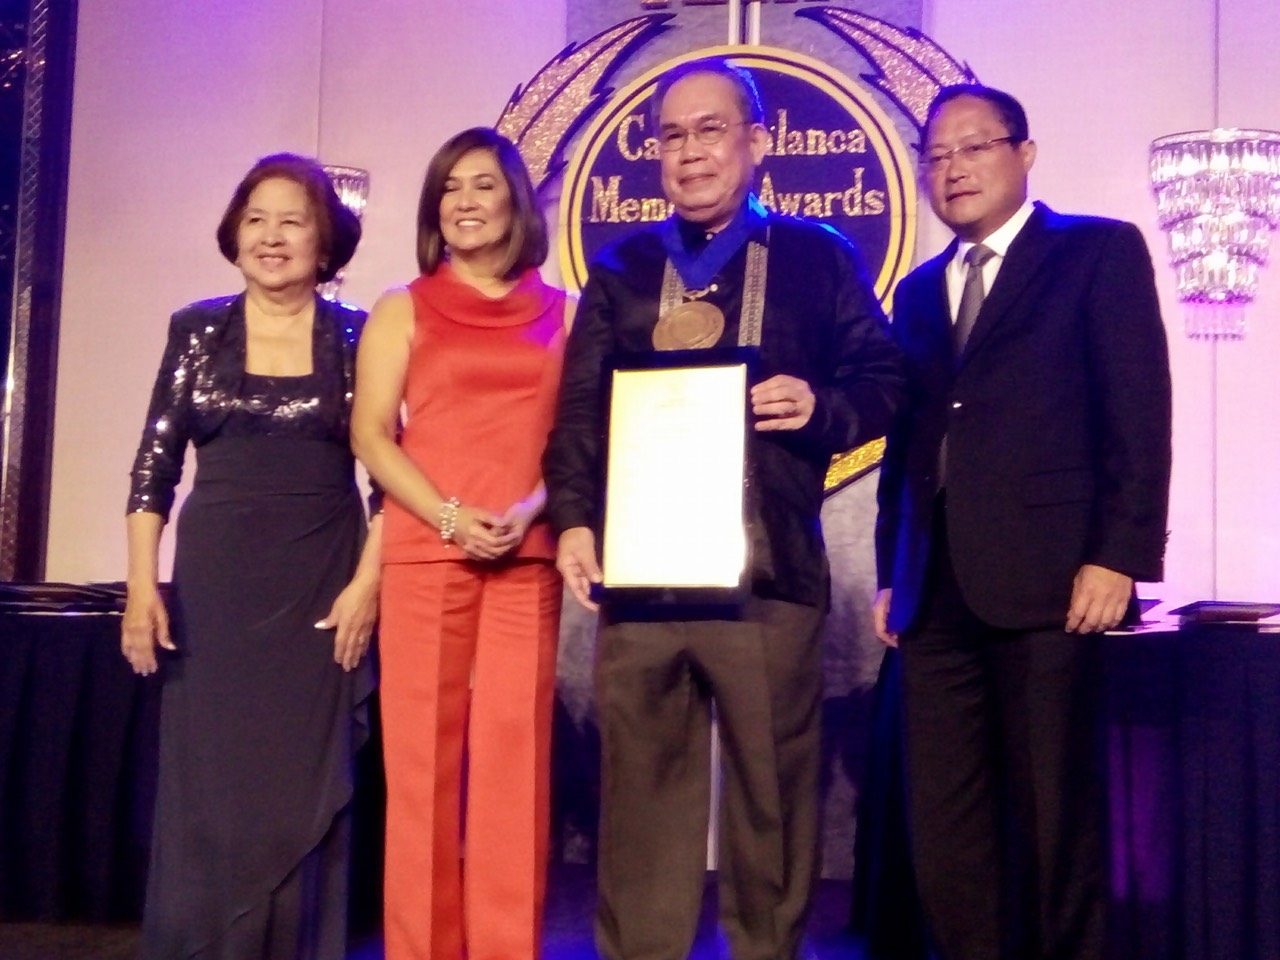 PALANCA AWARDS. Sylvia Palanca Quirino, Criselda Cecilio-Palanca, and Carl Anthony Palanca pose with Dr. Jose Y. Dalisay, guest of honor. Photo by Susan Claire Agbayani 